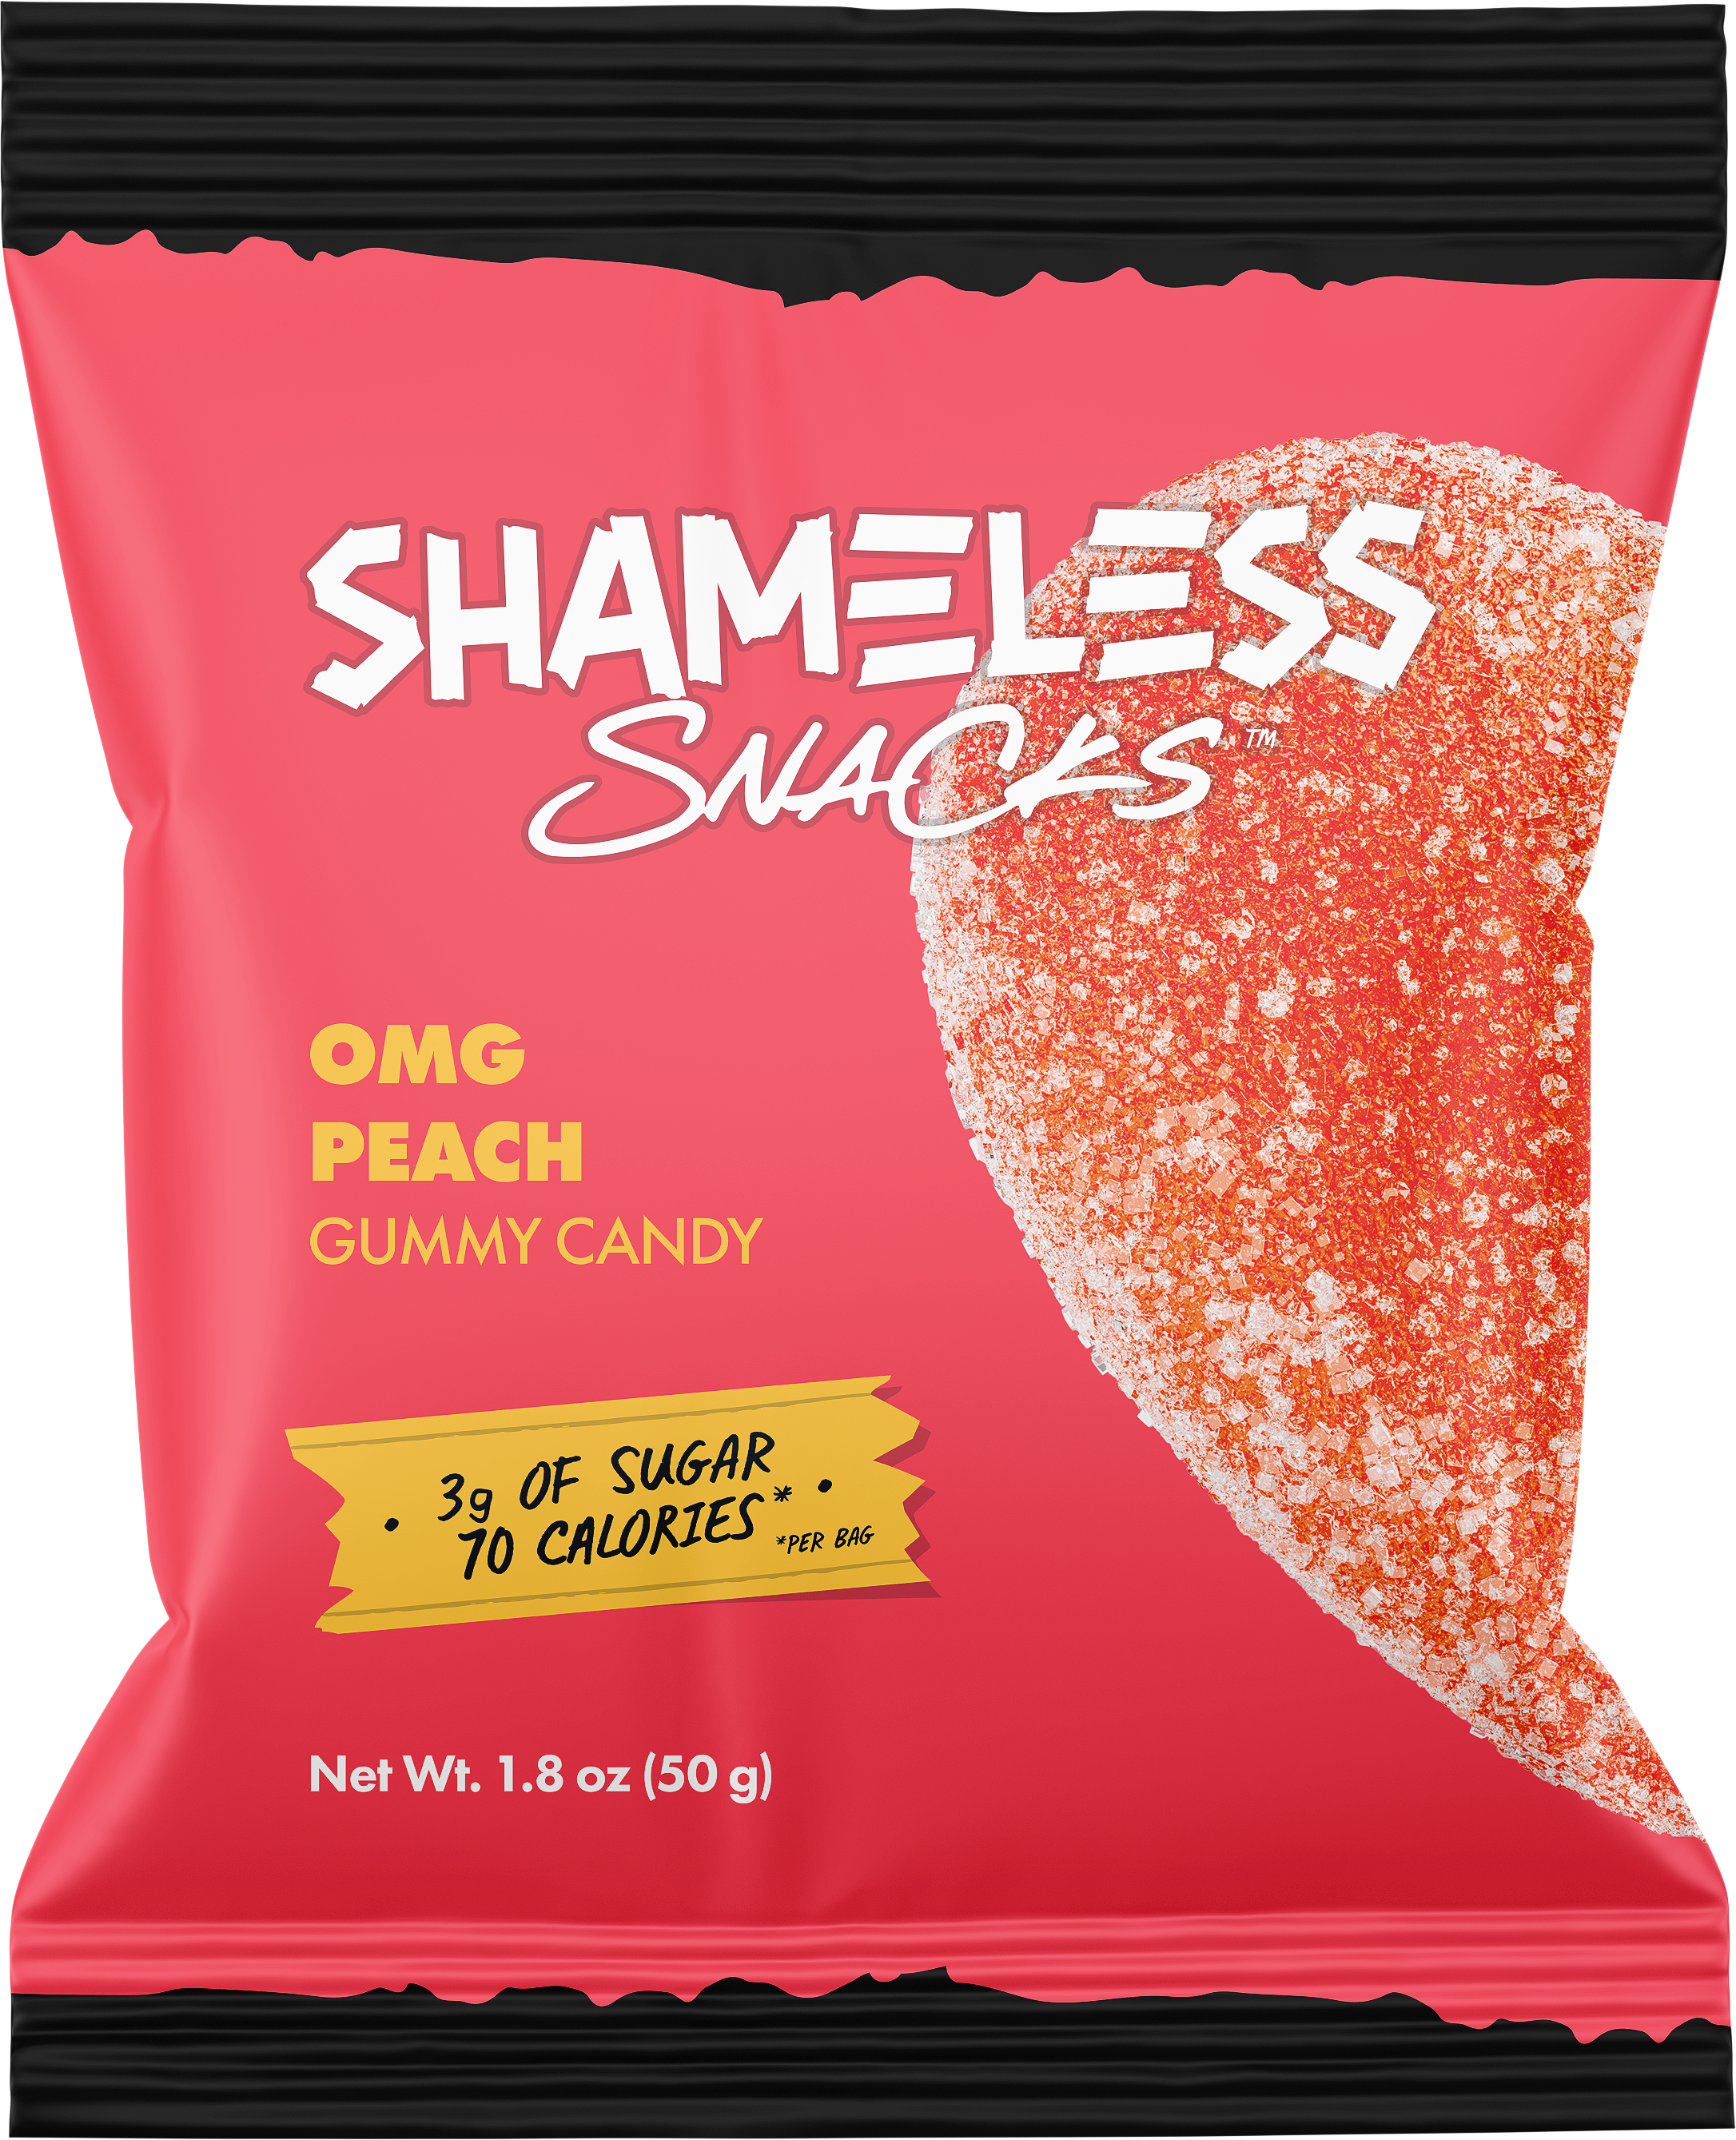 Gummy Candy by Shameless Snacks - OMG Peach - High-quality Candies by Shameless Snacks at 